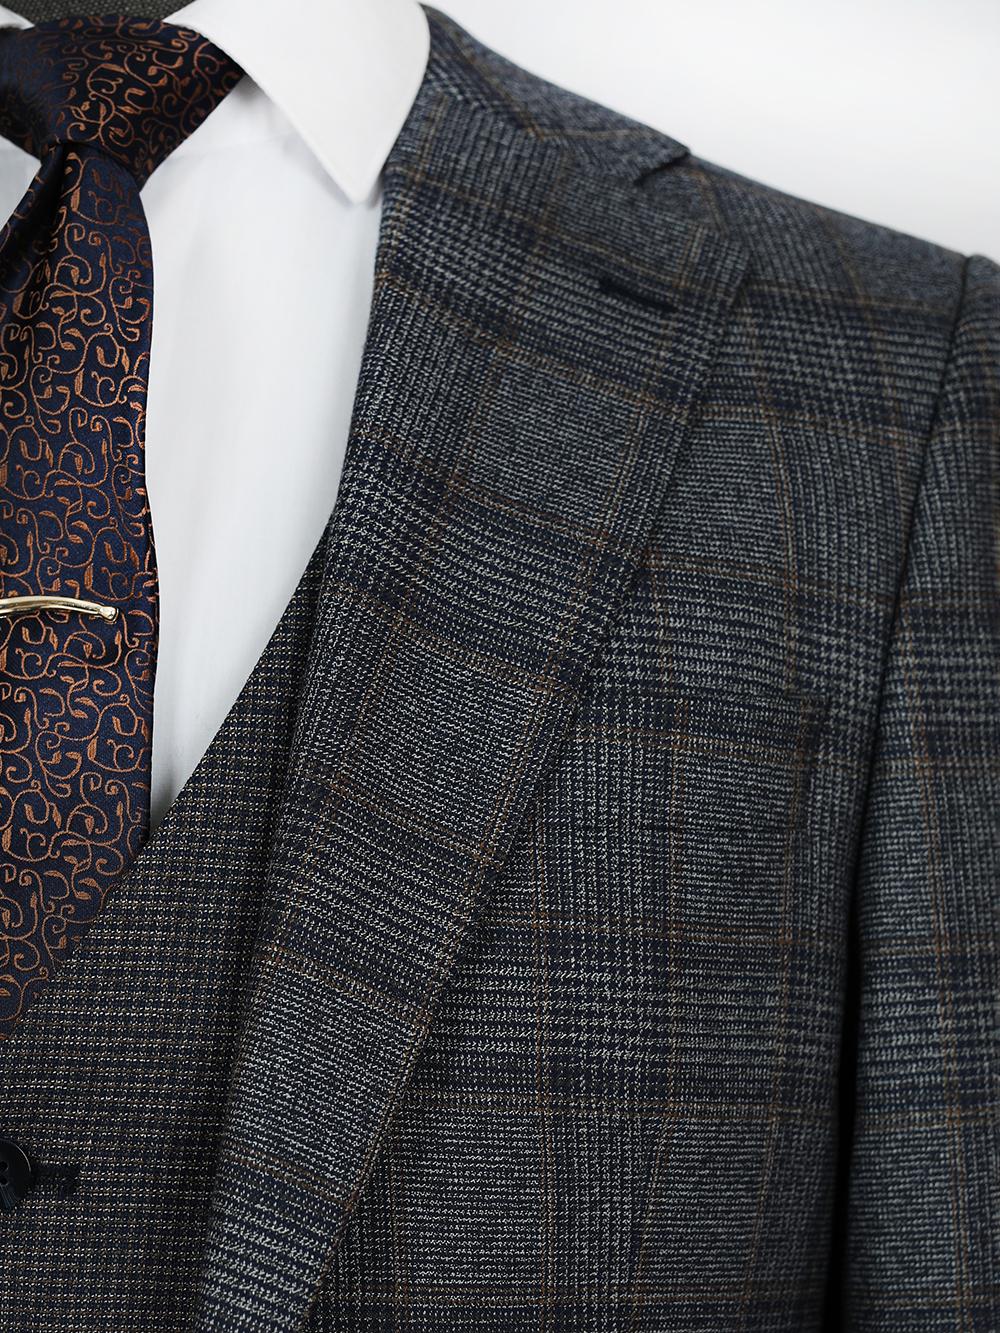 Ronan Grey Set Blazer Linen Suit